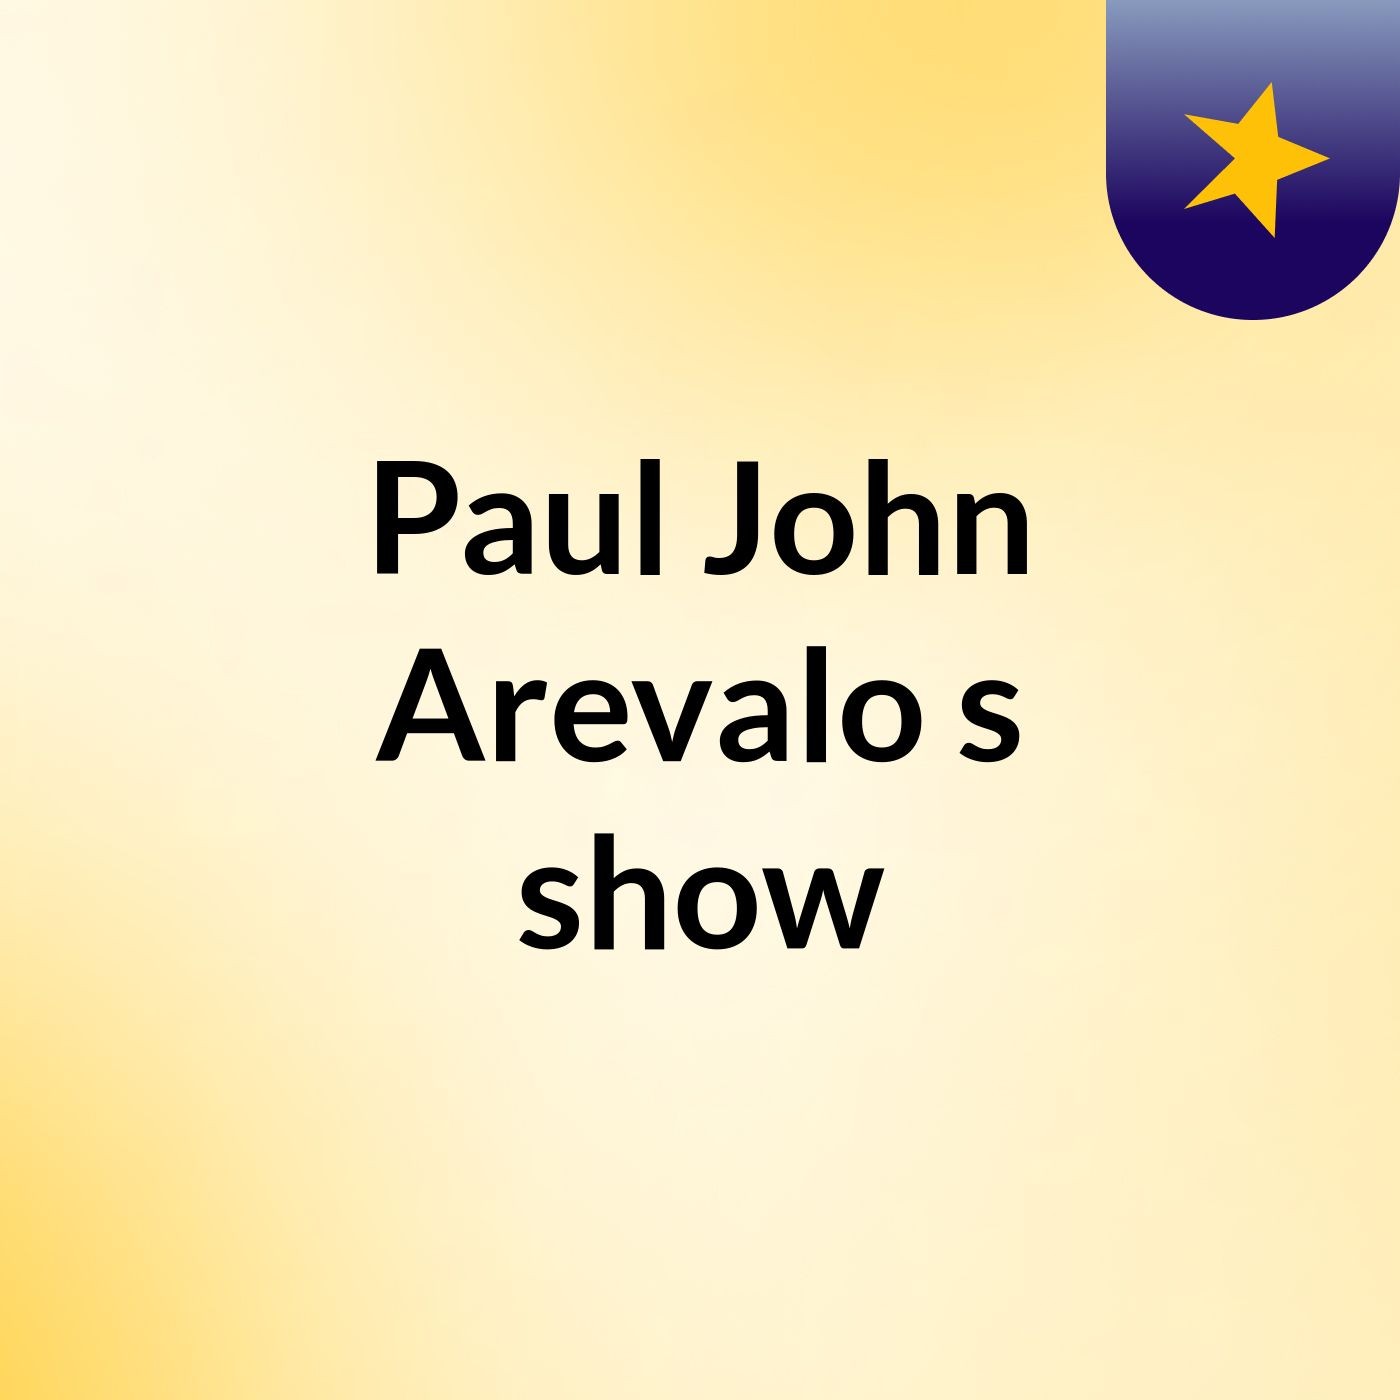 Paul John Arevalo's show